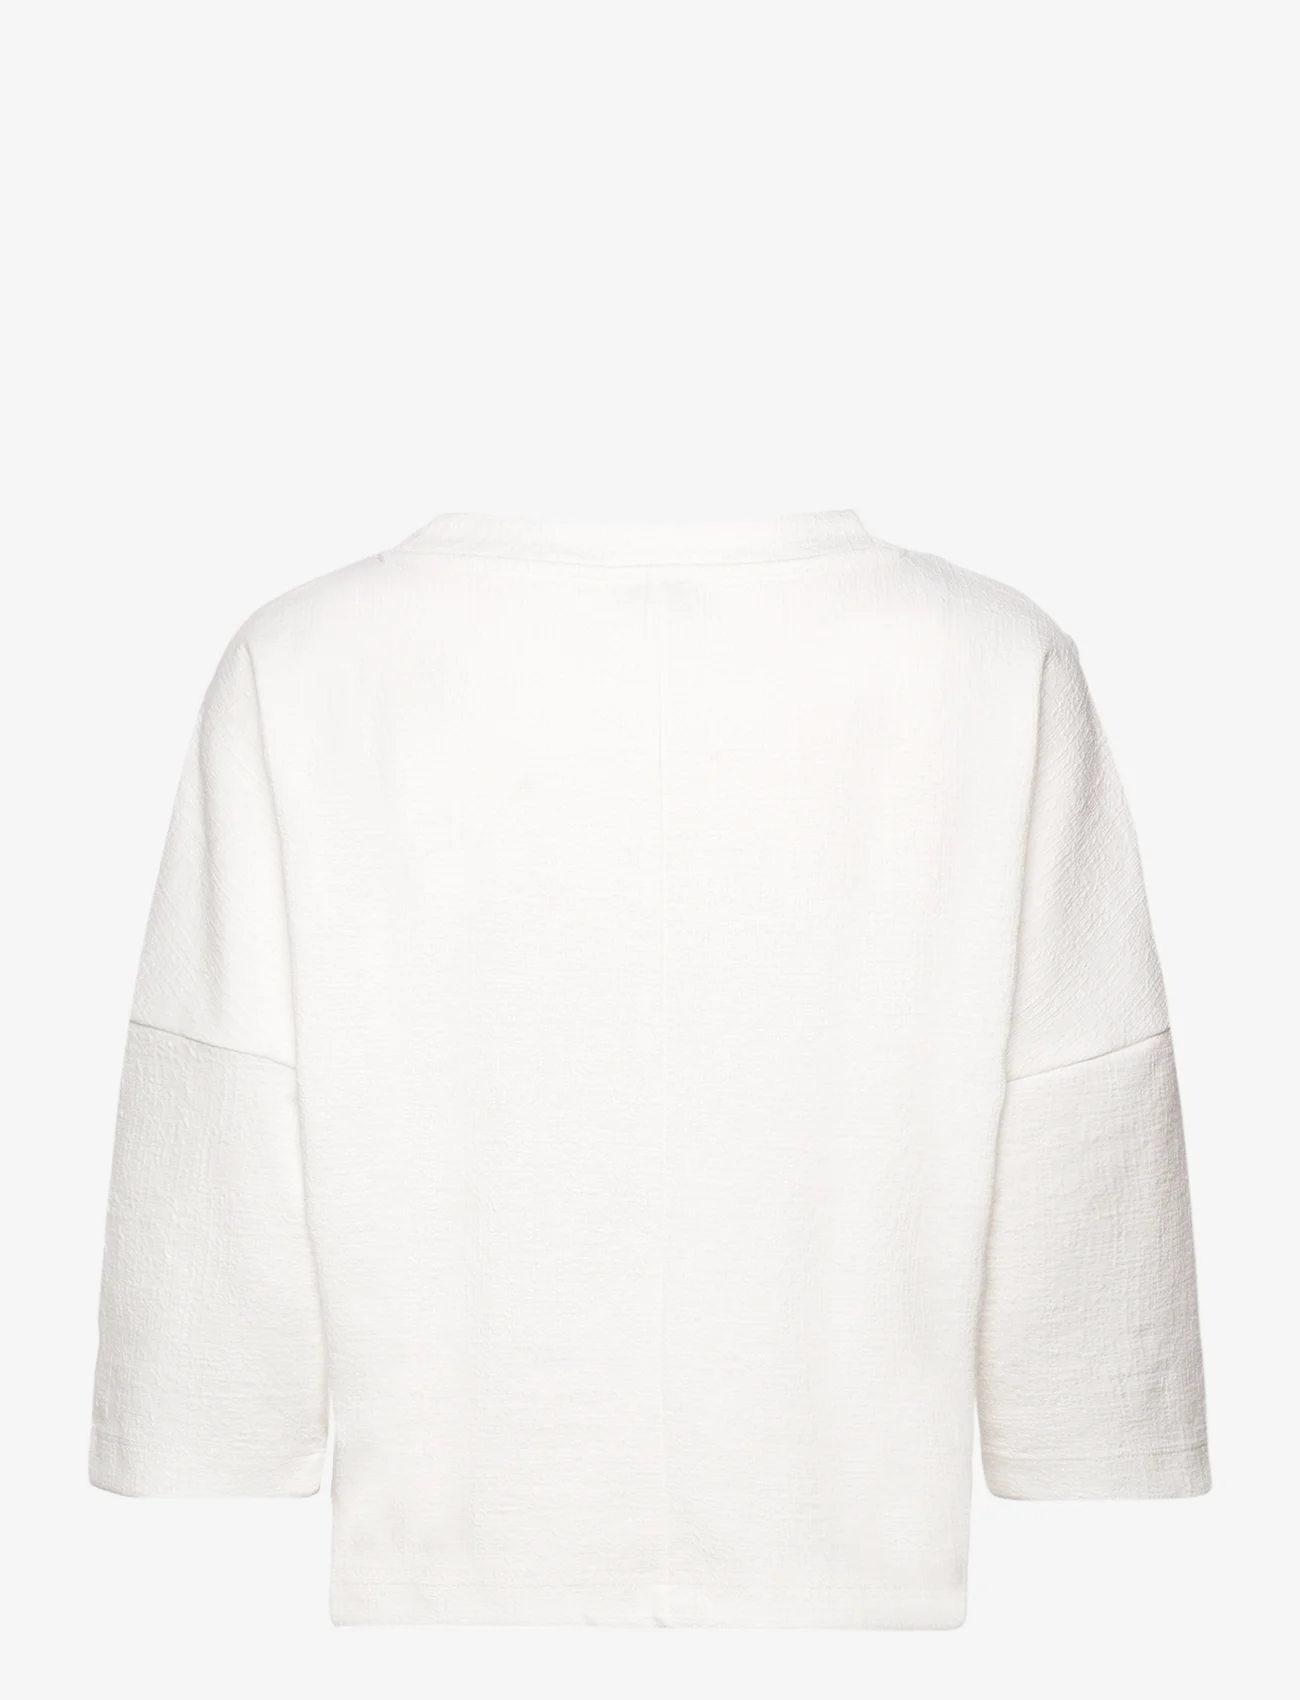 Tom Tailor - Sweatshirt w buttons - plus size - whisper white - 1